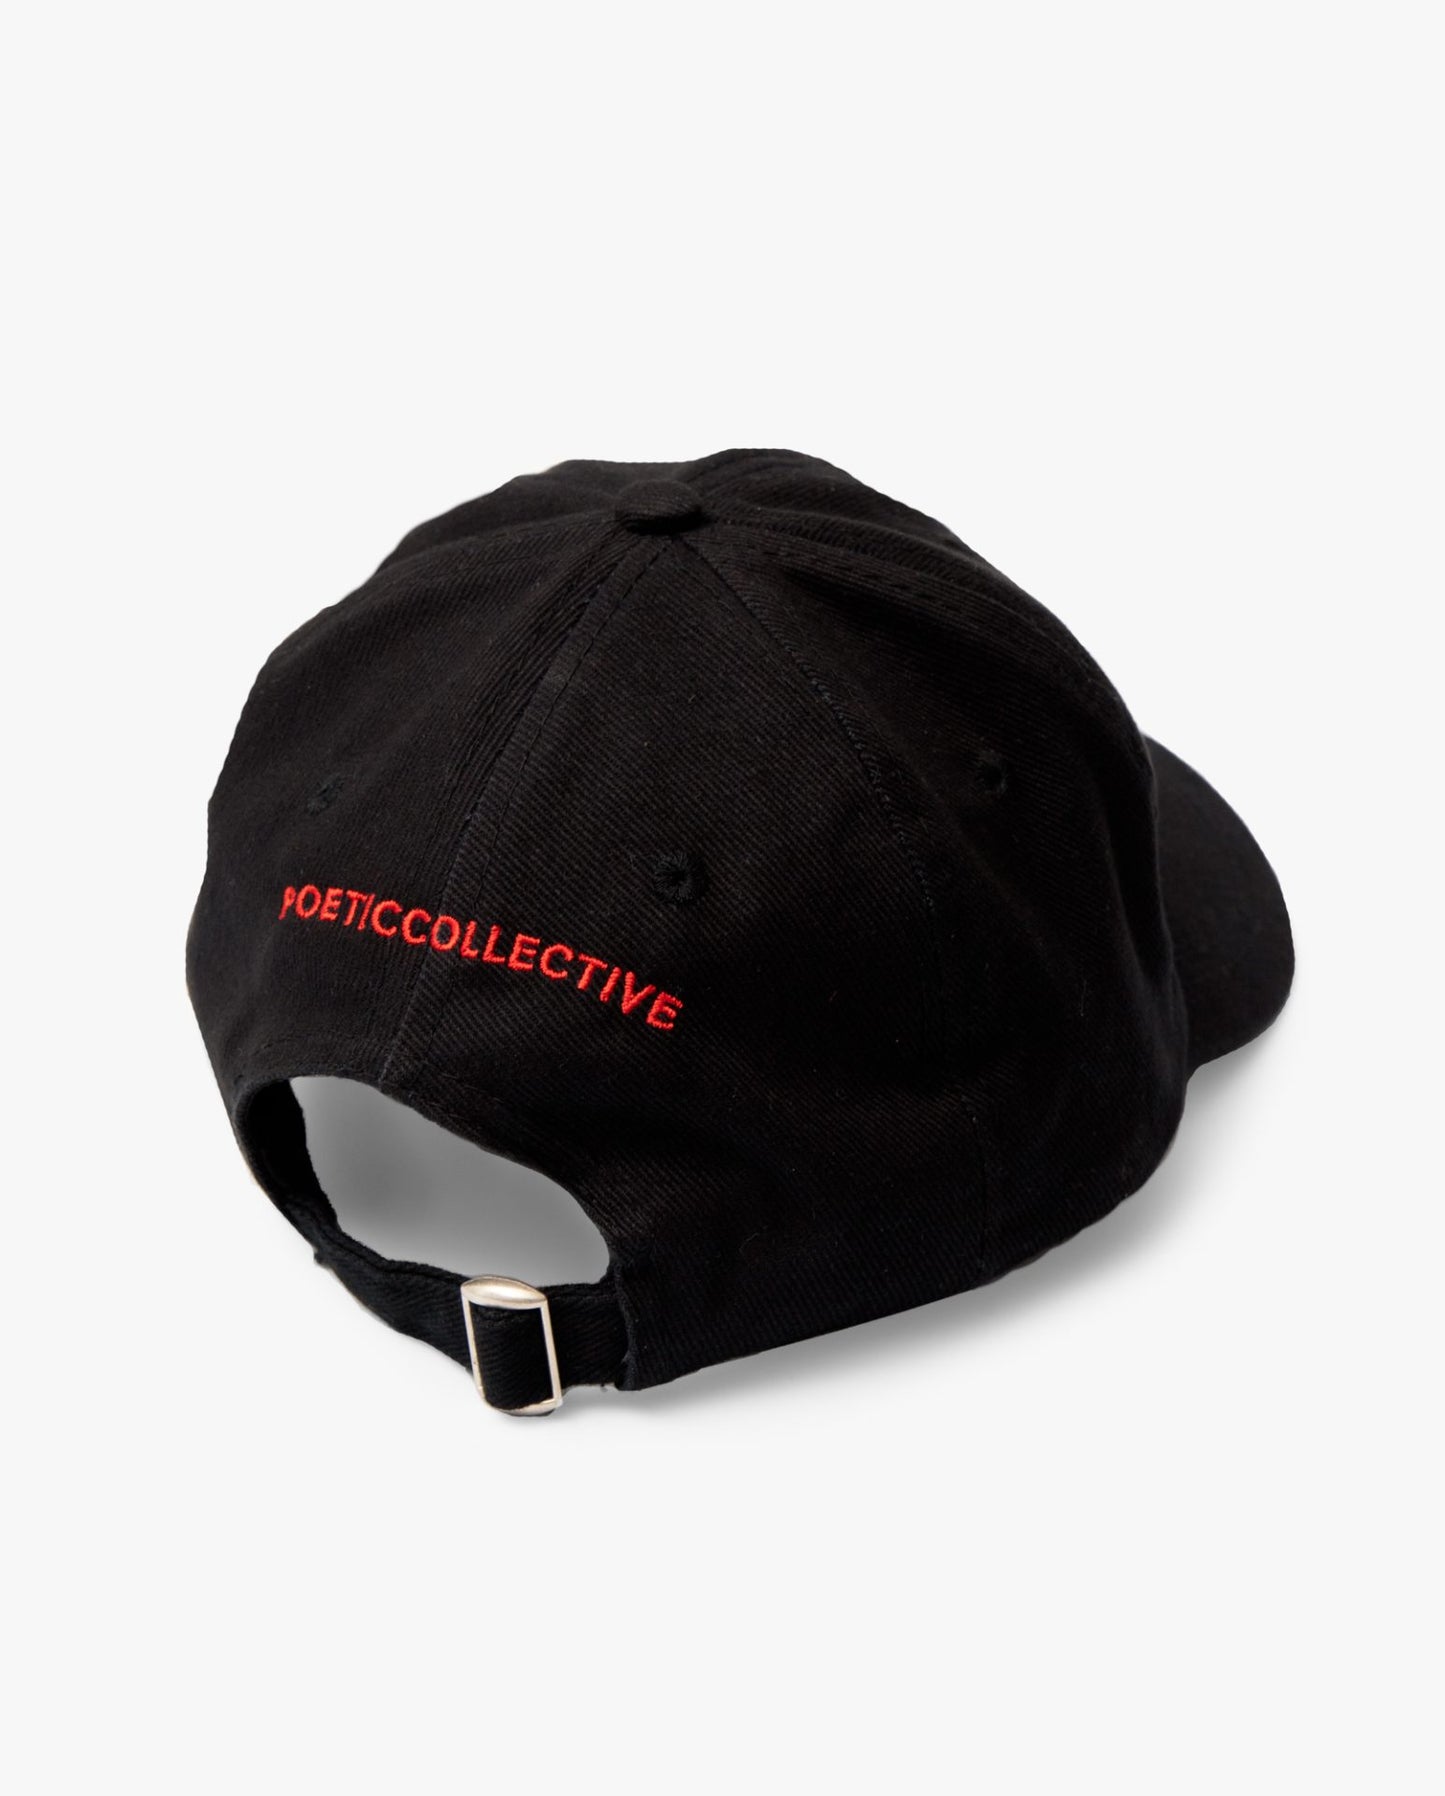 POETIC COLLECTIVE - CLASSIC CAP - BLACK/RED